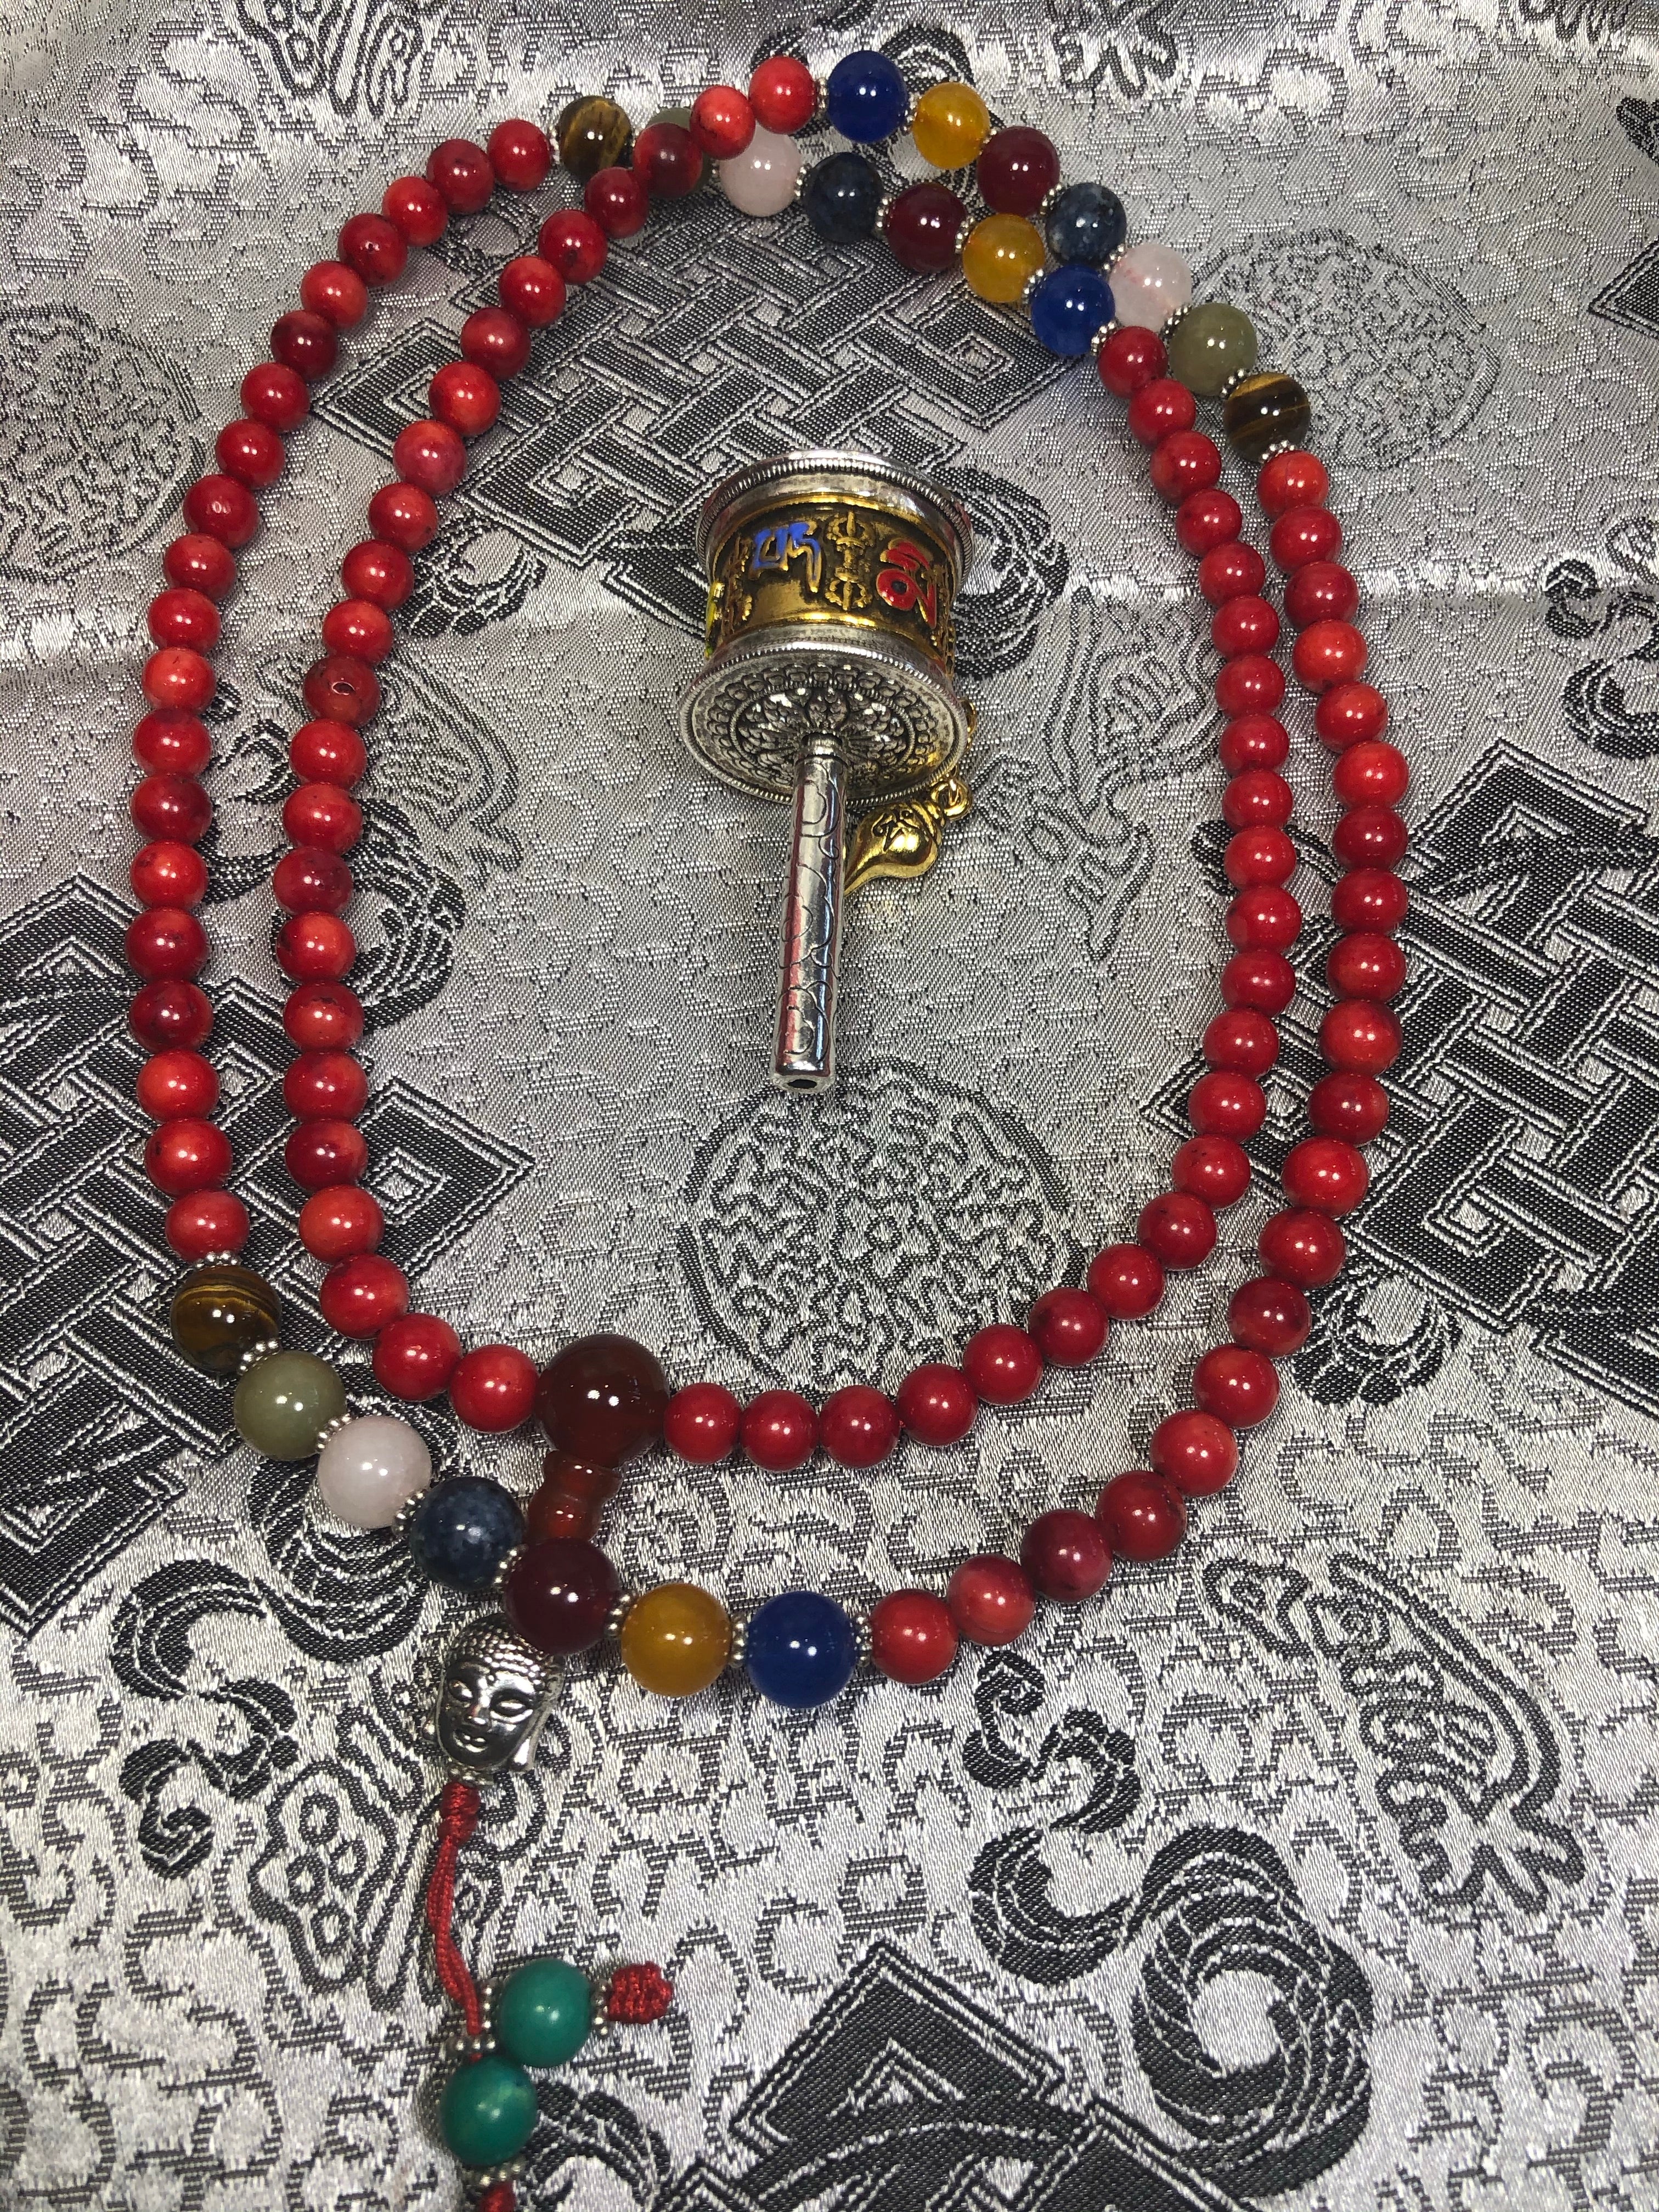 coral prayer beads